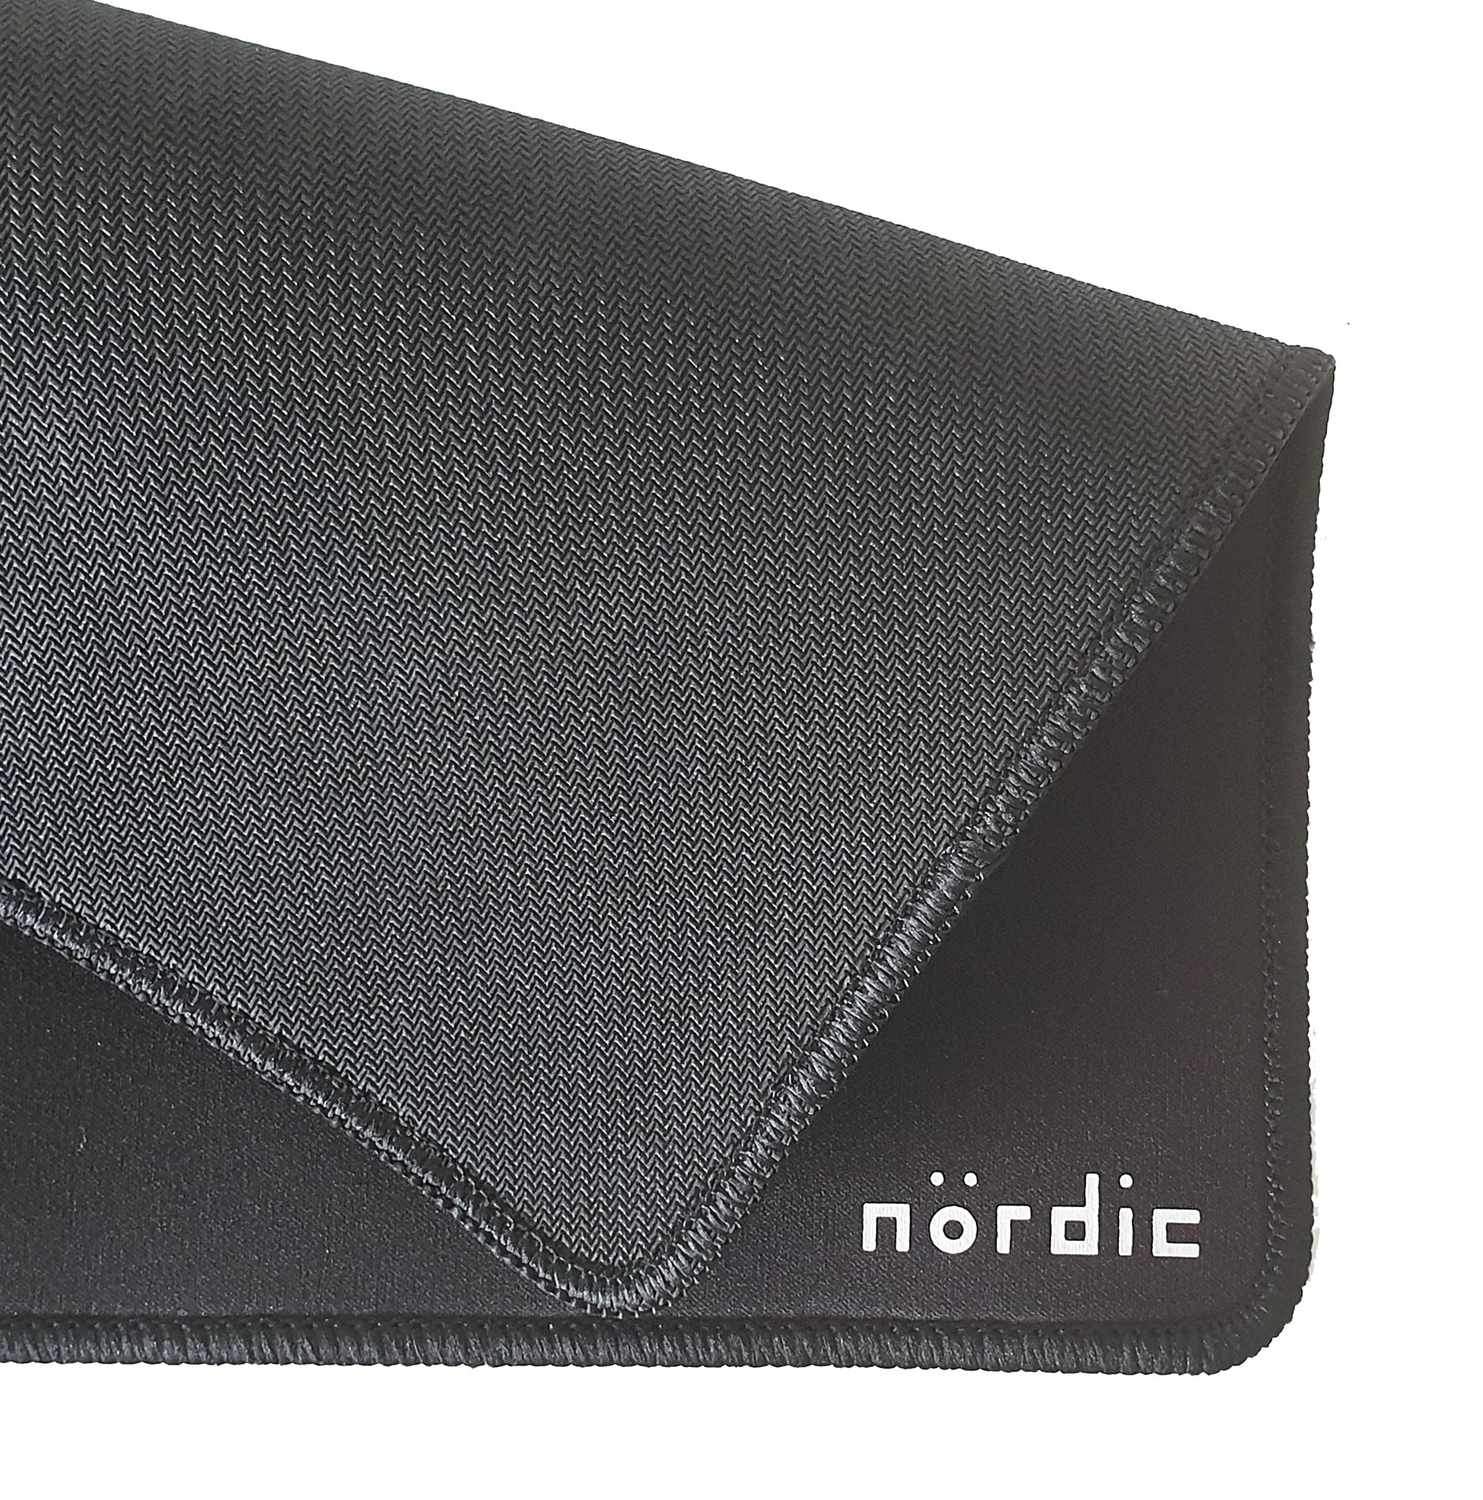 NÖRDIC MousePad, 320x270x3mm, glidefritt naturgummi, elastan Top, sydd kanter, svart